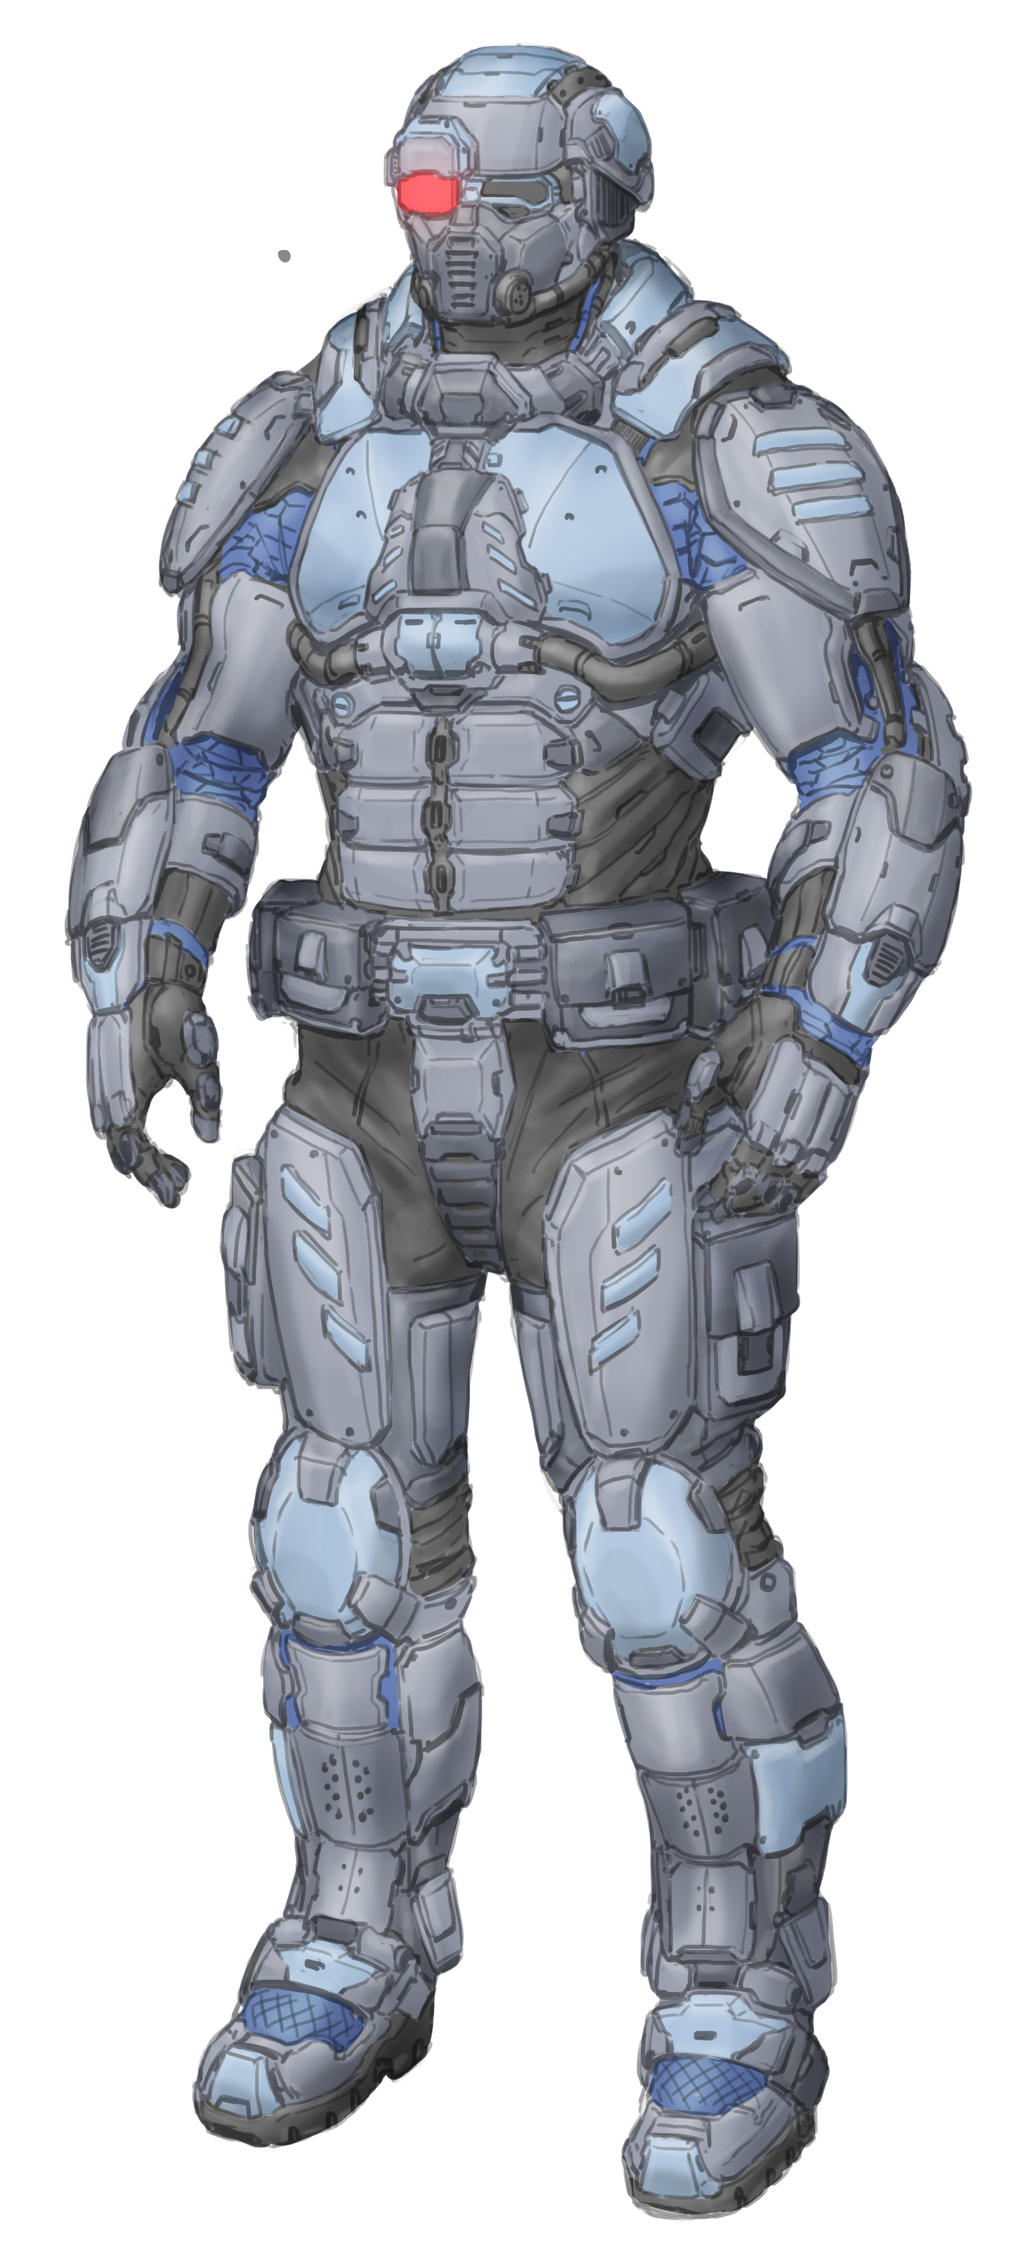 Sci-Fi Armor Design #03 by NotMuchNormal on DeviantArt